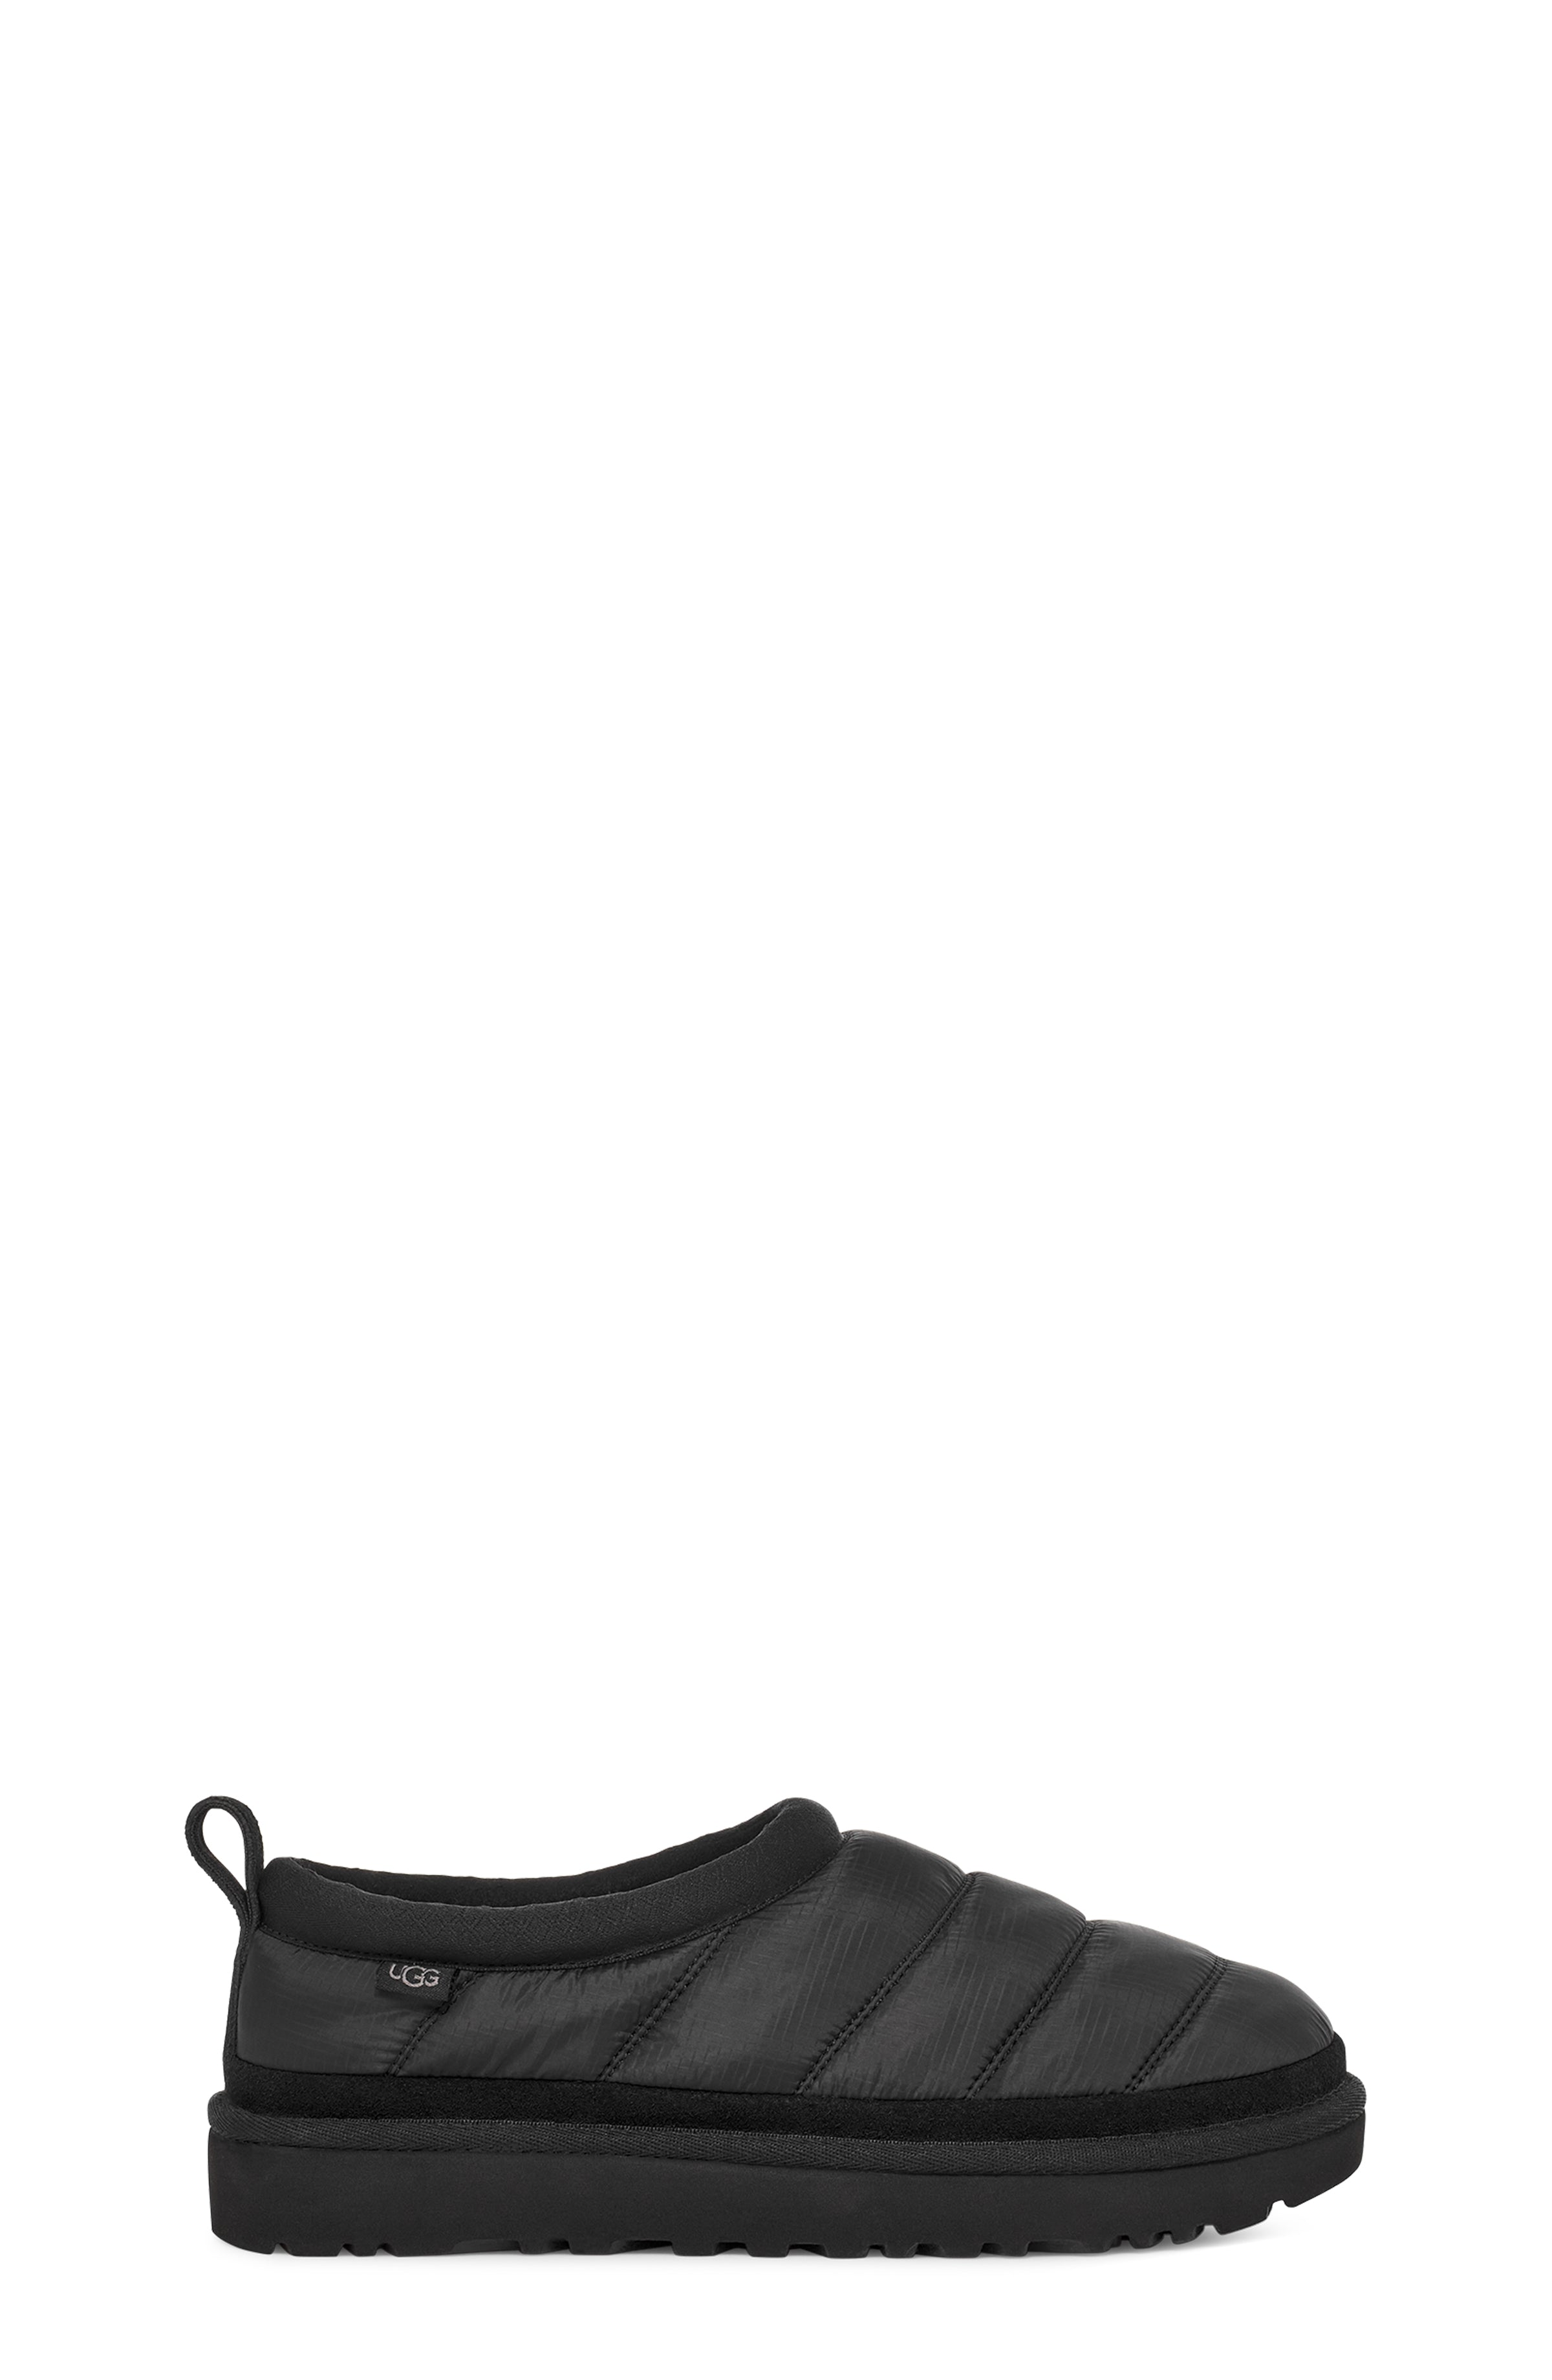 Sample UGG Tasman LTA Sandal Black 5 